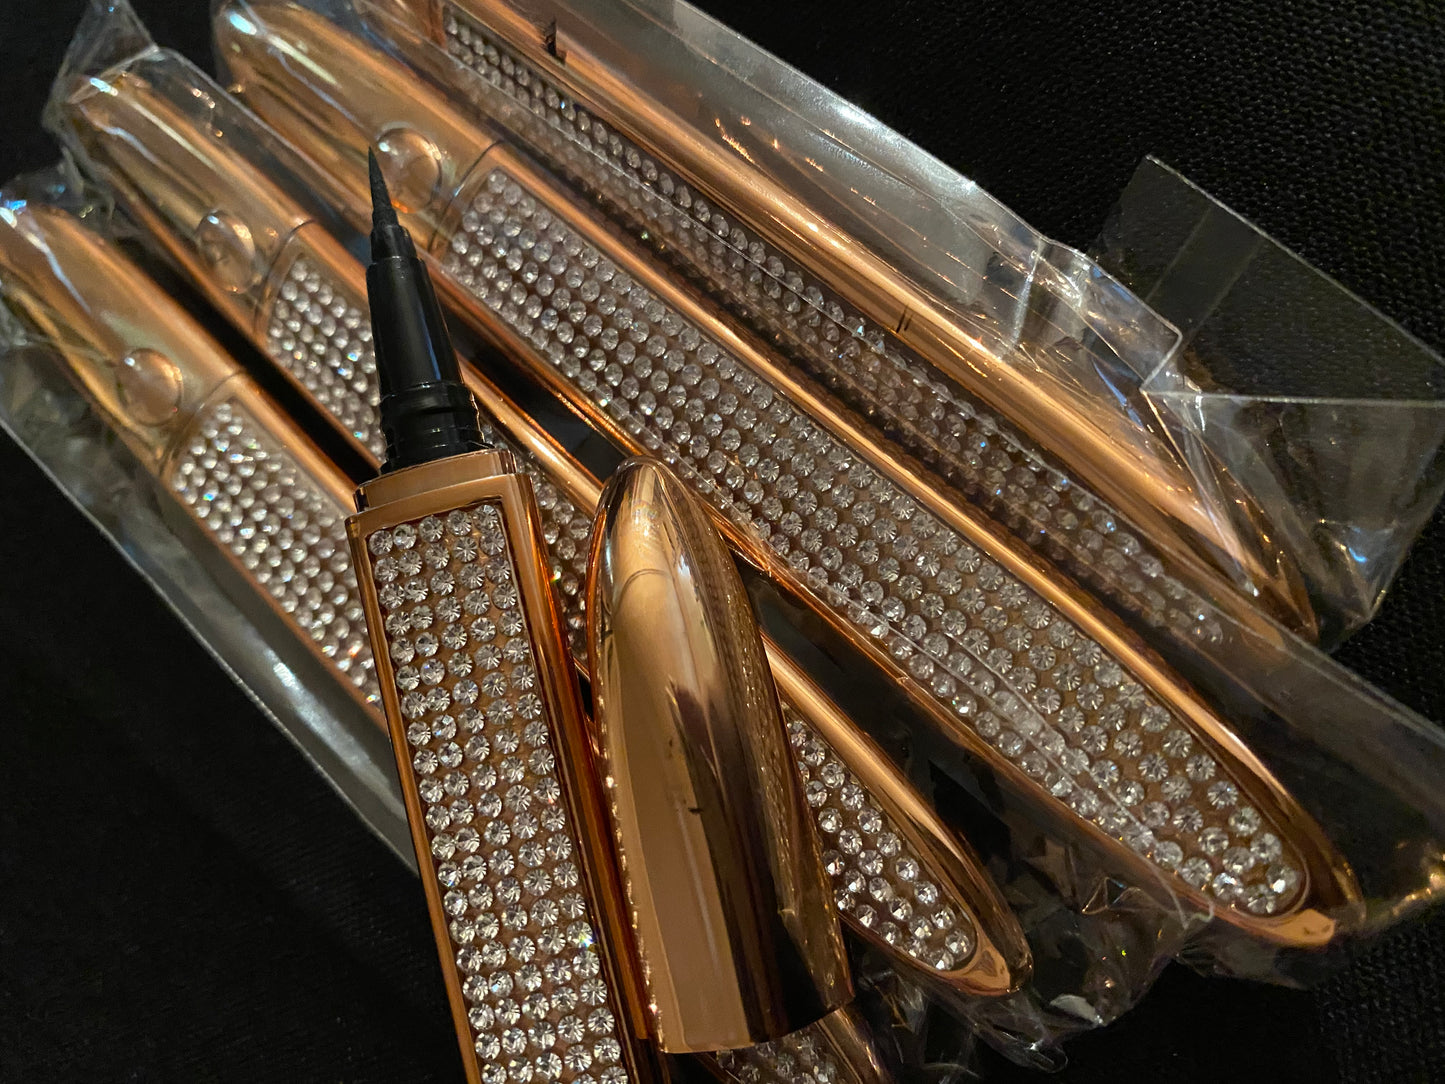 Glue pens